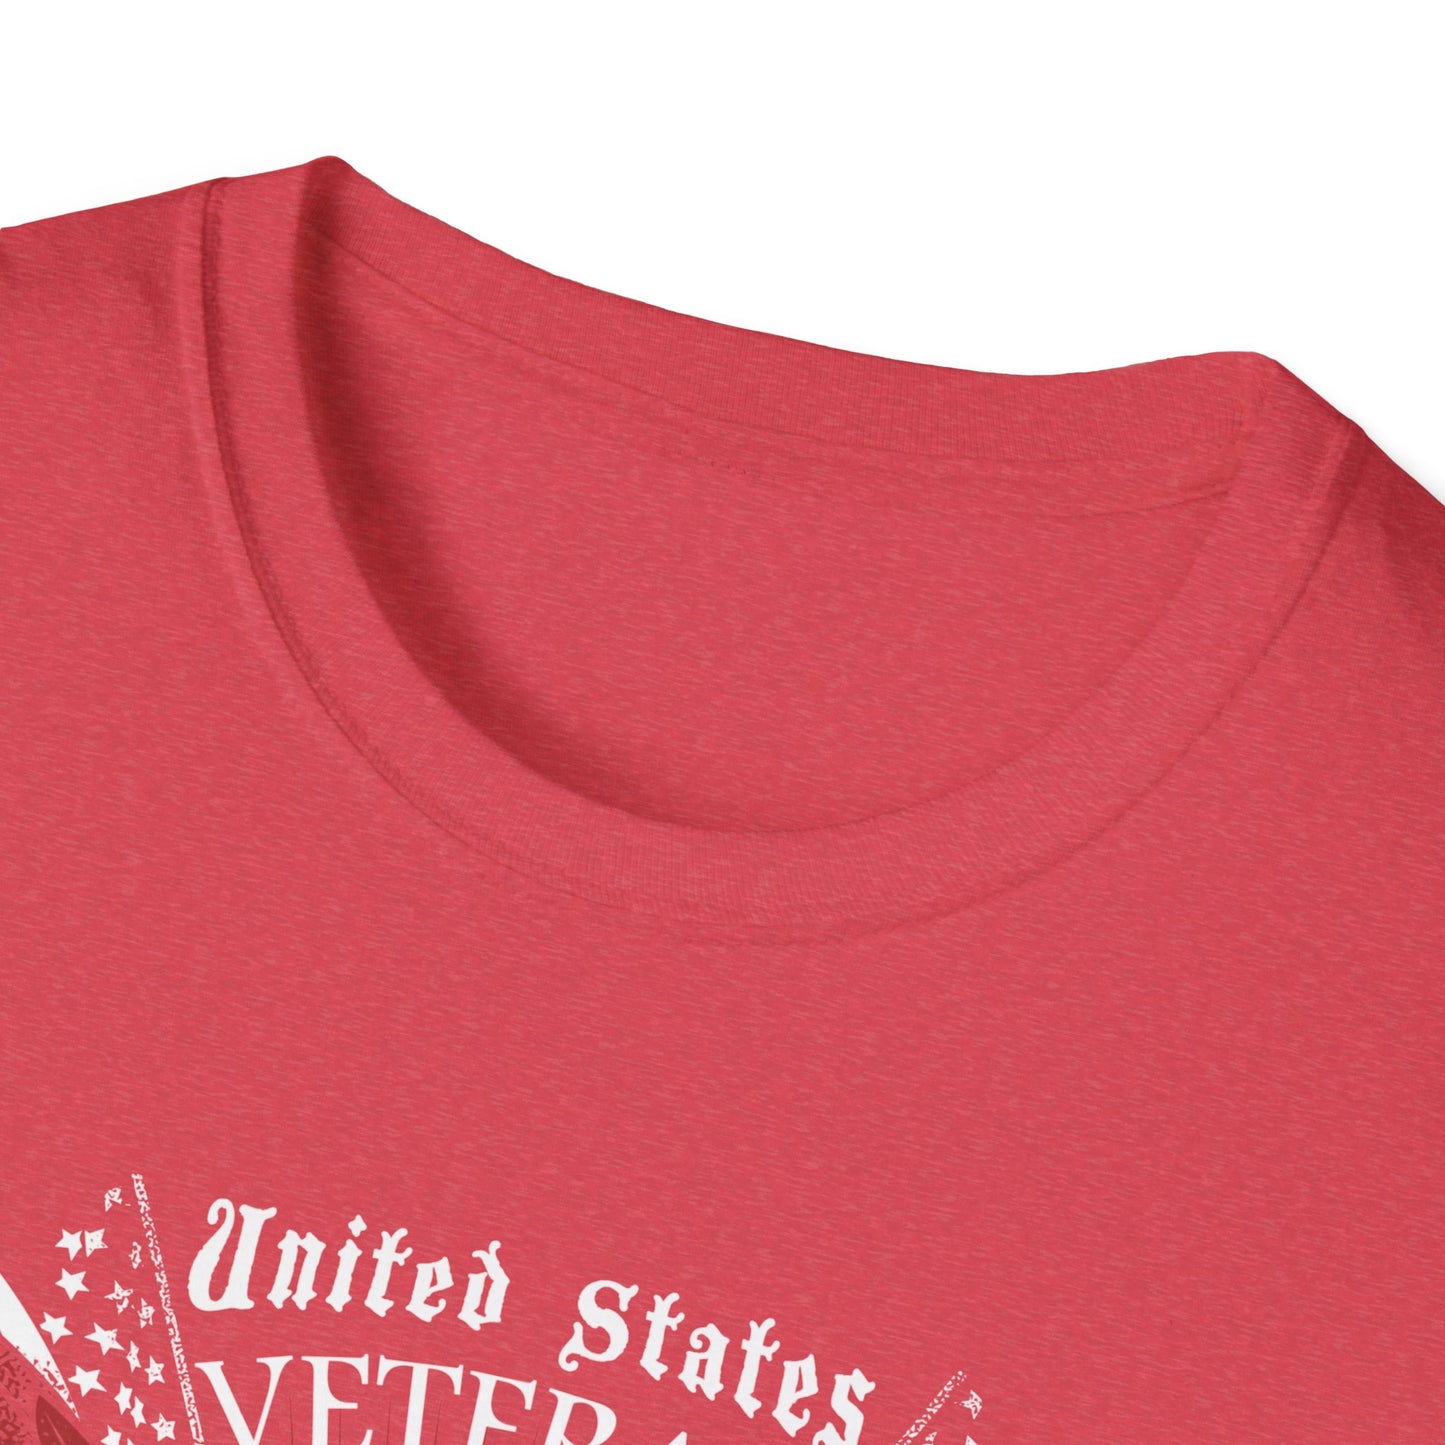 United States Veteran - Unisex Softstyle T-Shirt